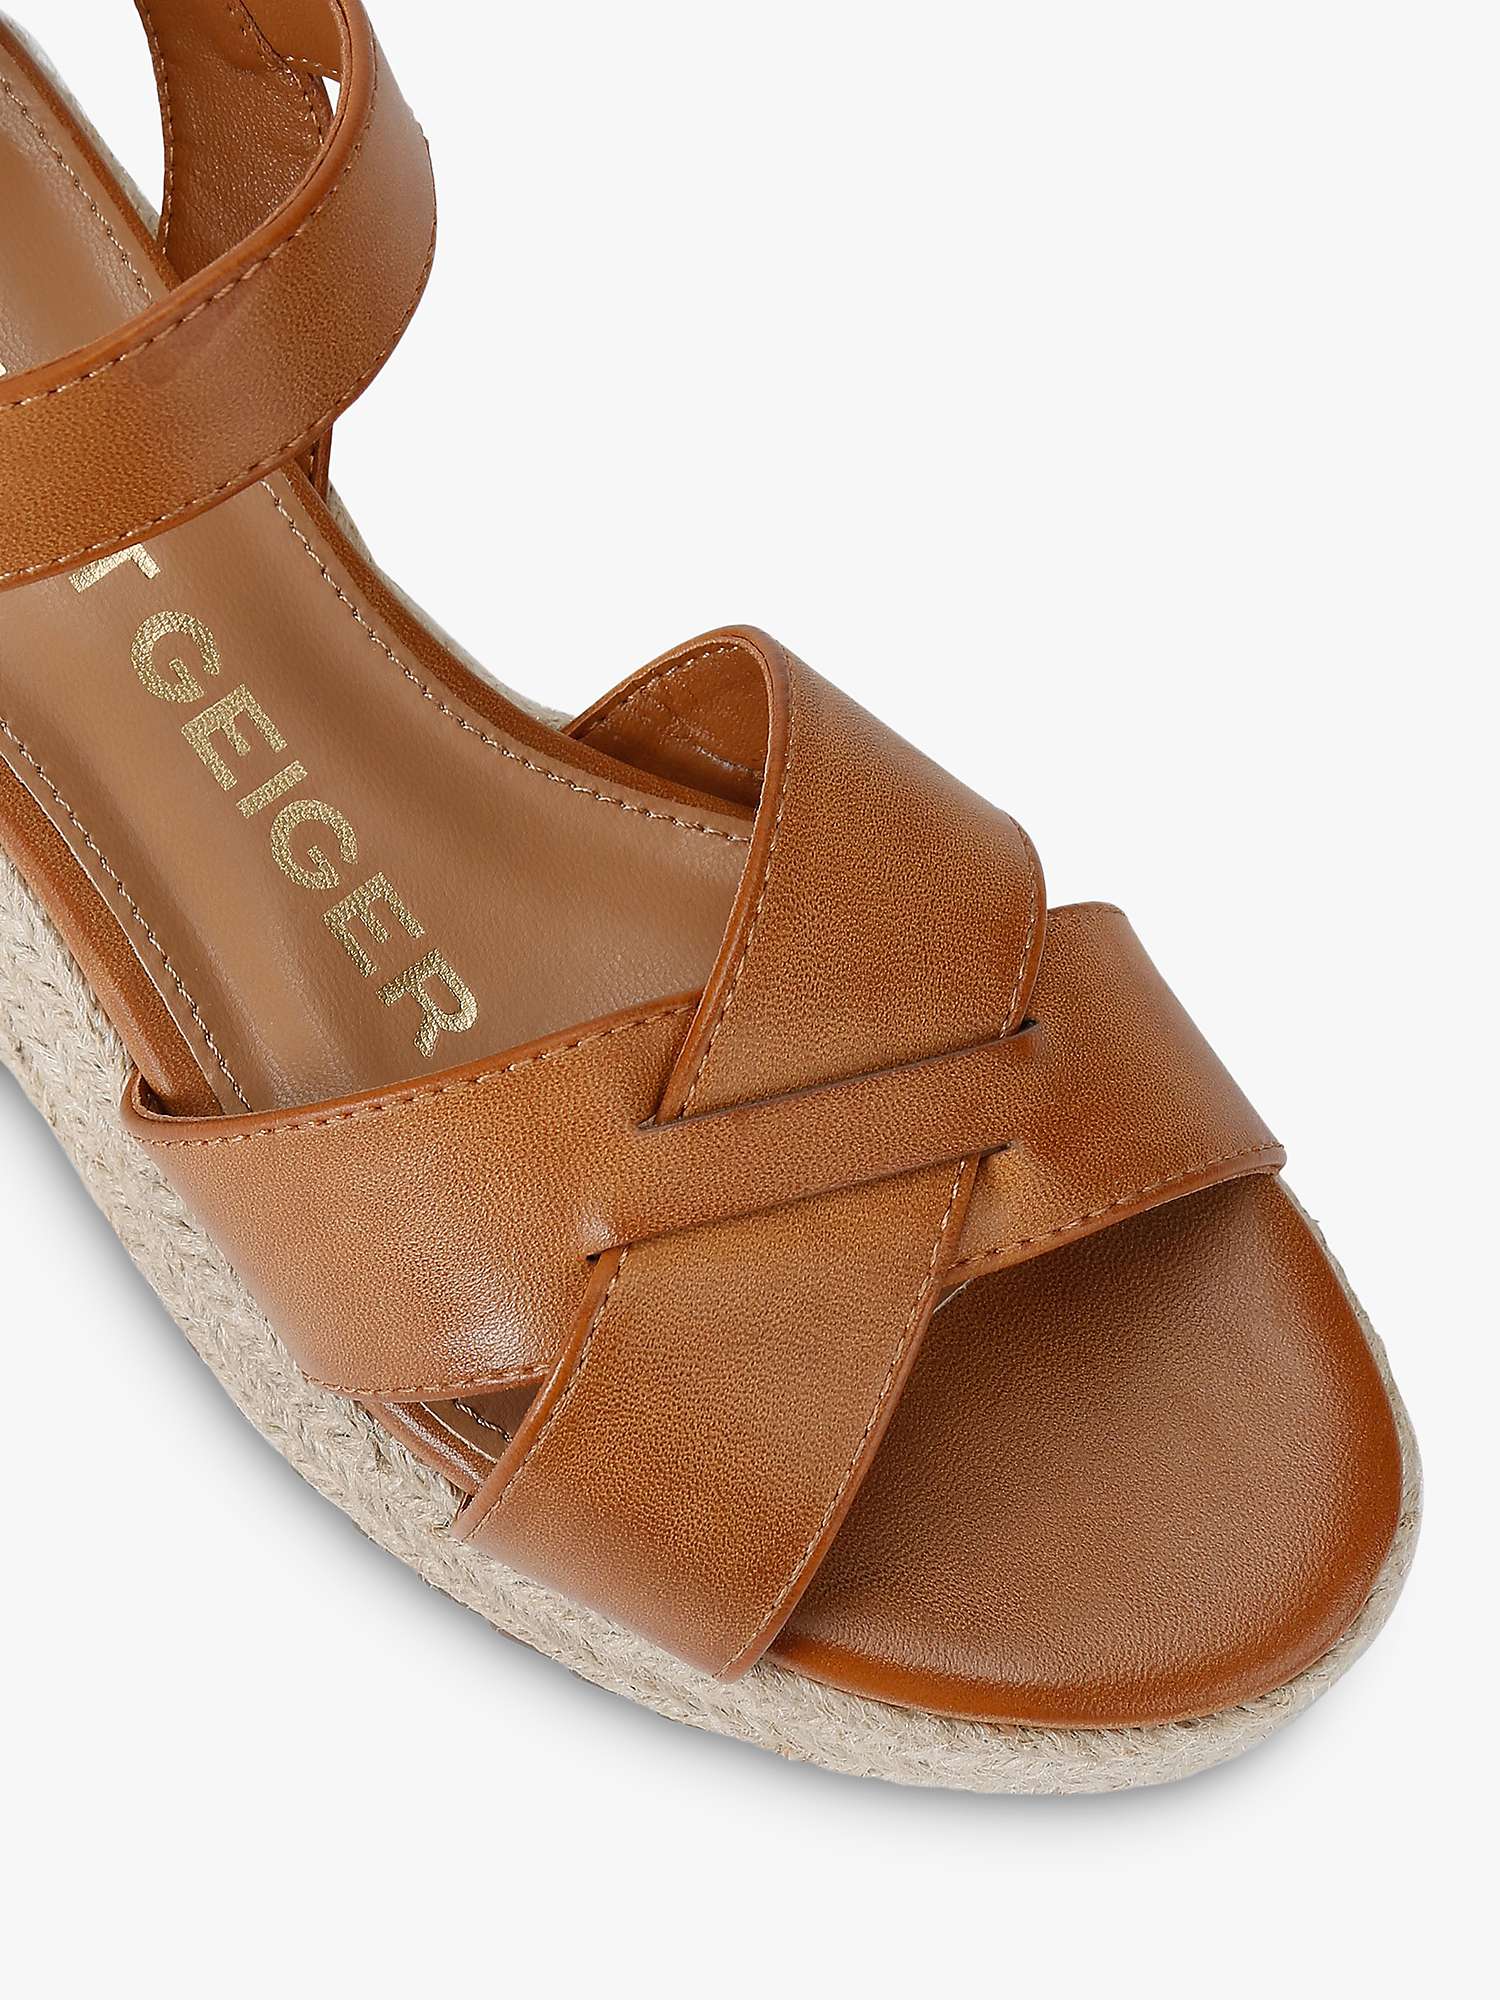 Buy KG Kurt Geiger Piper Wedge Sandals Online at johnlewis.com